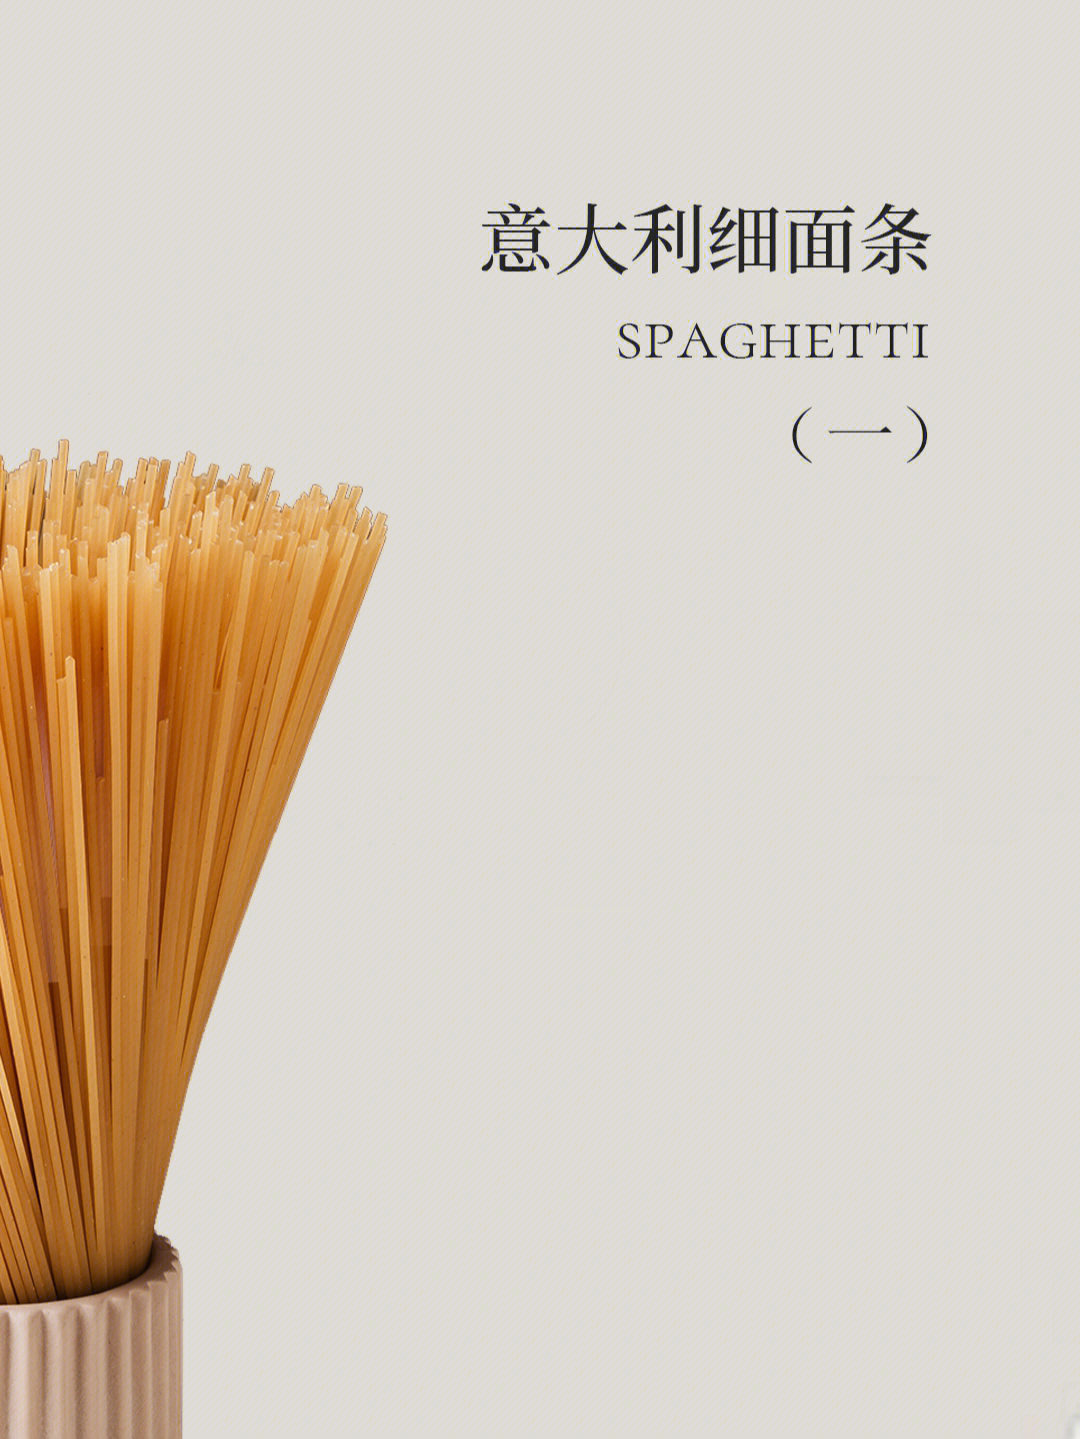 spaghetti读音图片